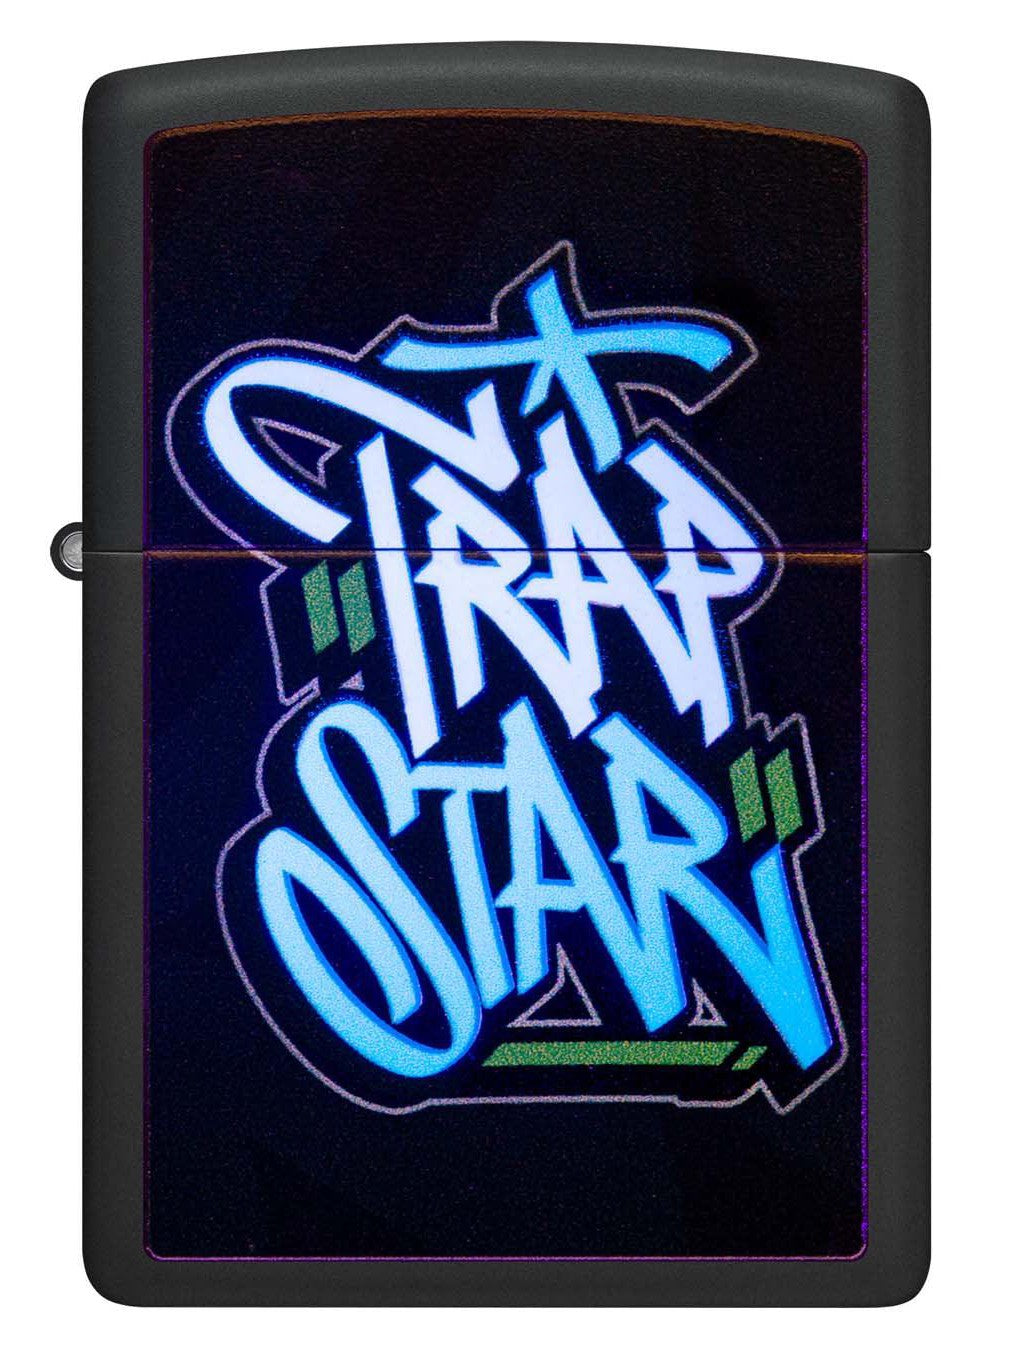 Zippo Lighter: Trap Star Graffiti, Black Light - Black Matte 48528